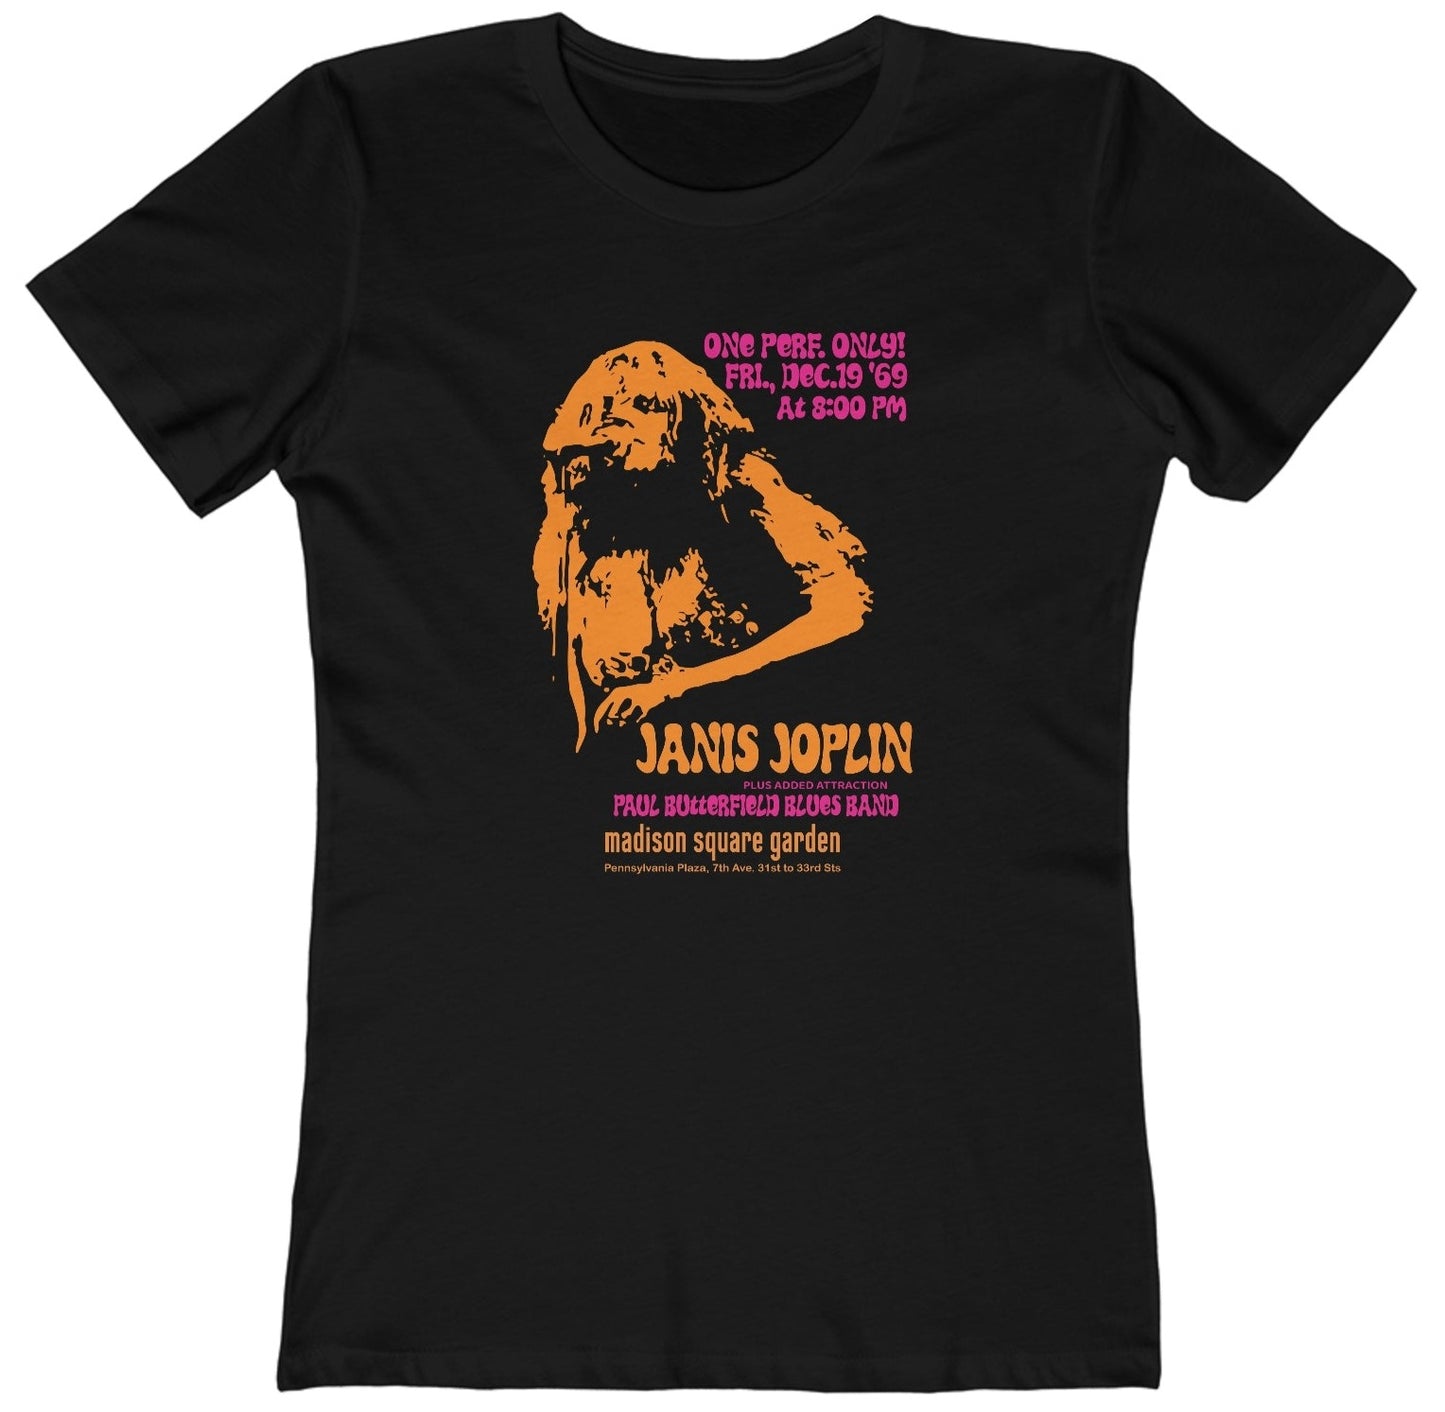 Janis Joplin t shirt